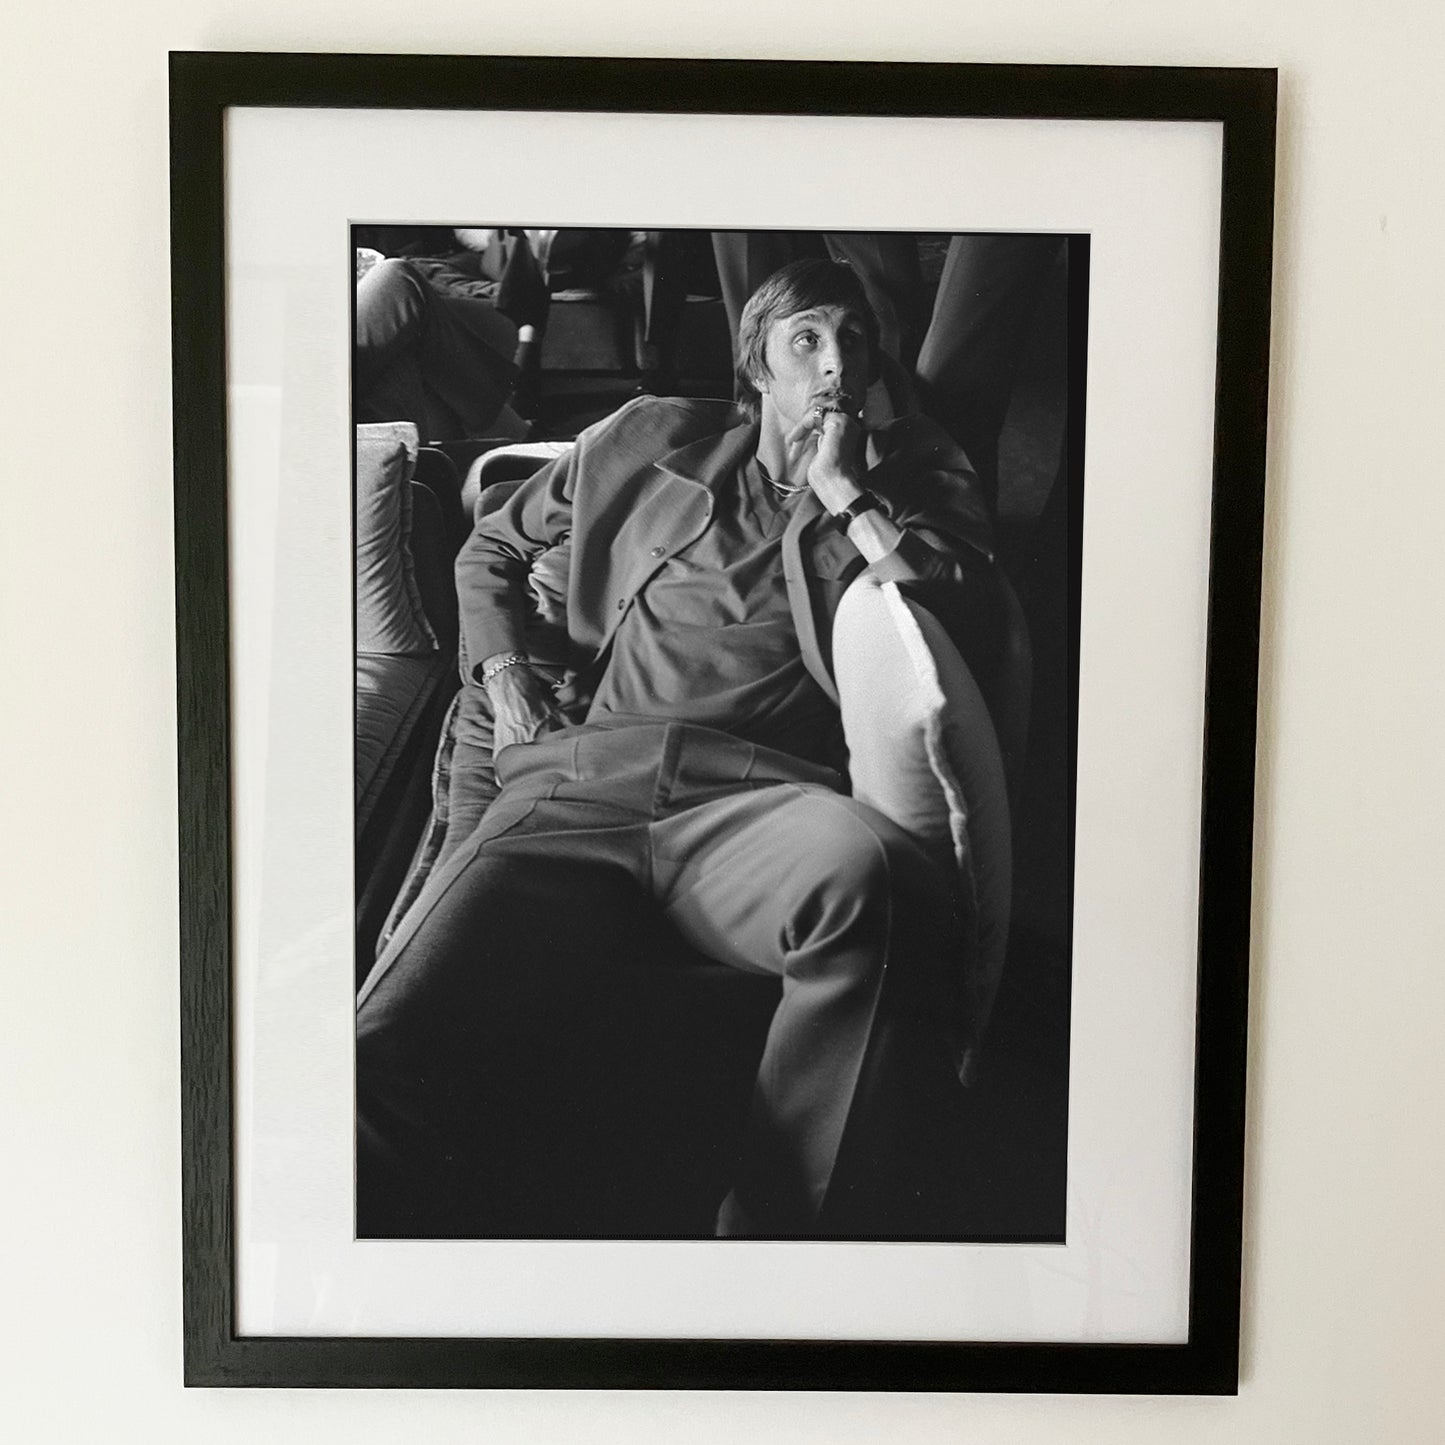 Johan Cruyff Framed Photo Print in Germany in 1974